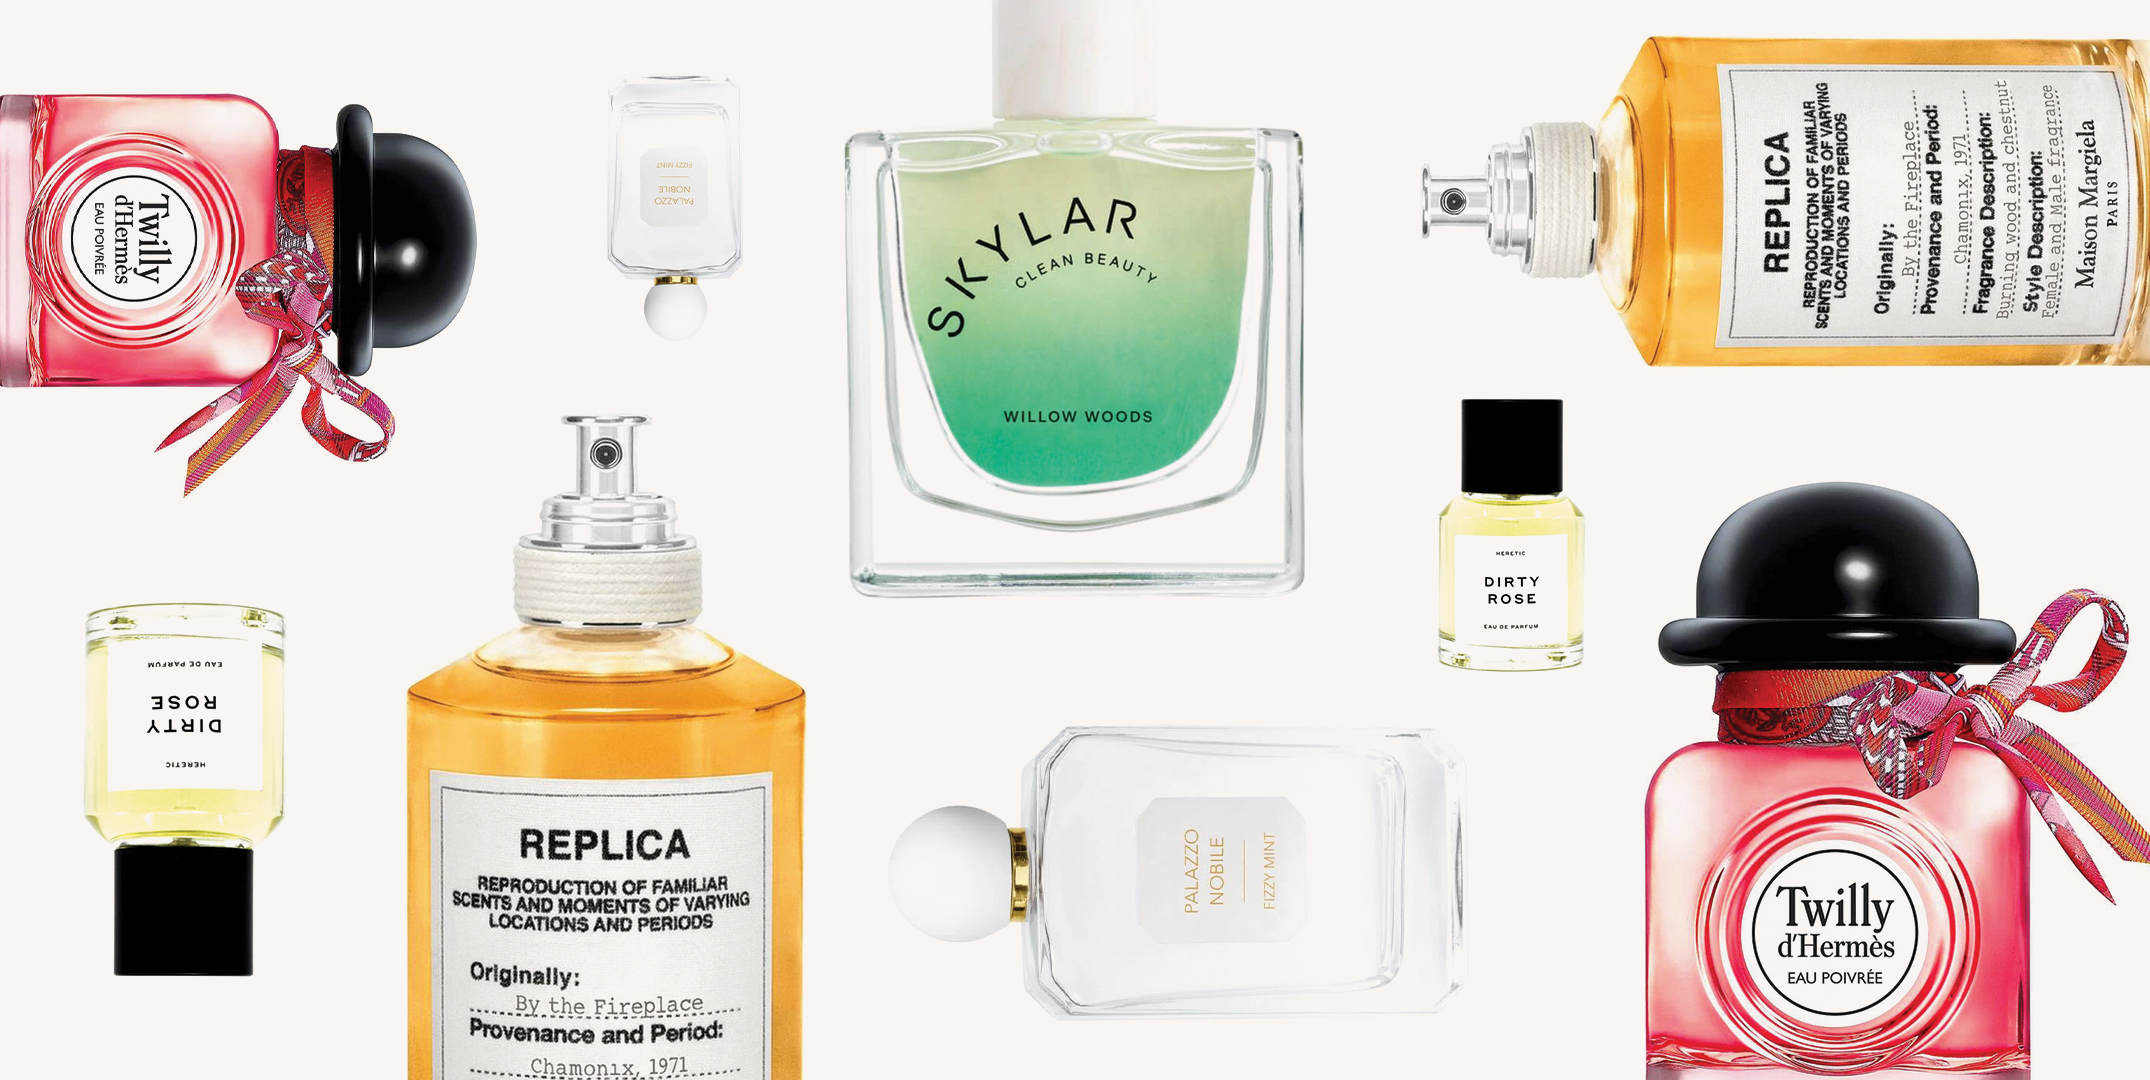 The 10 Best Carolina Herrera Perfumes Ranked by Me